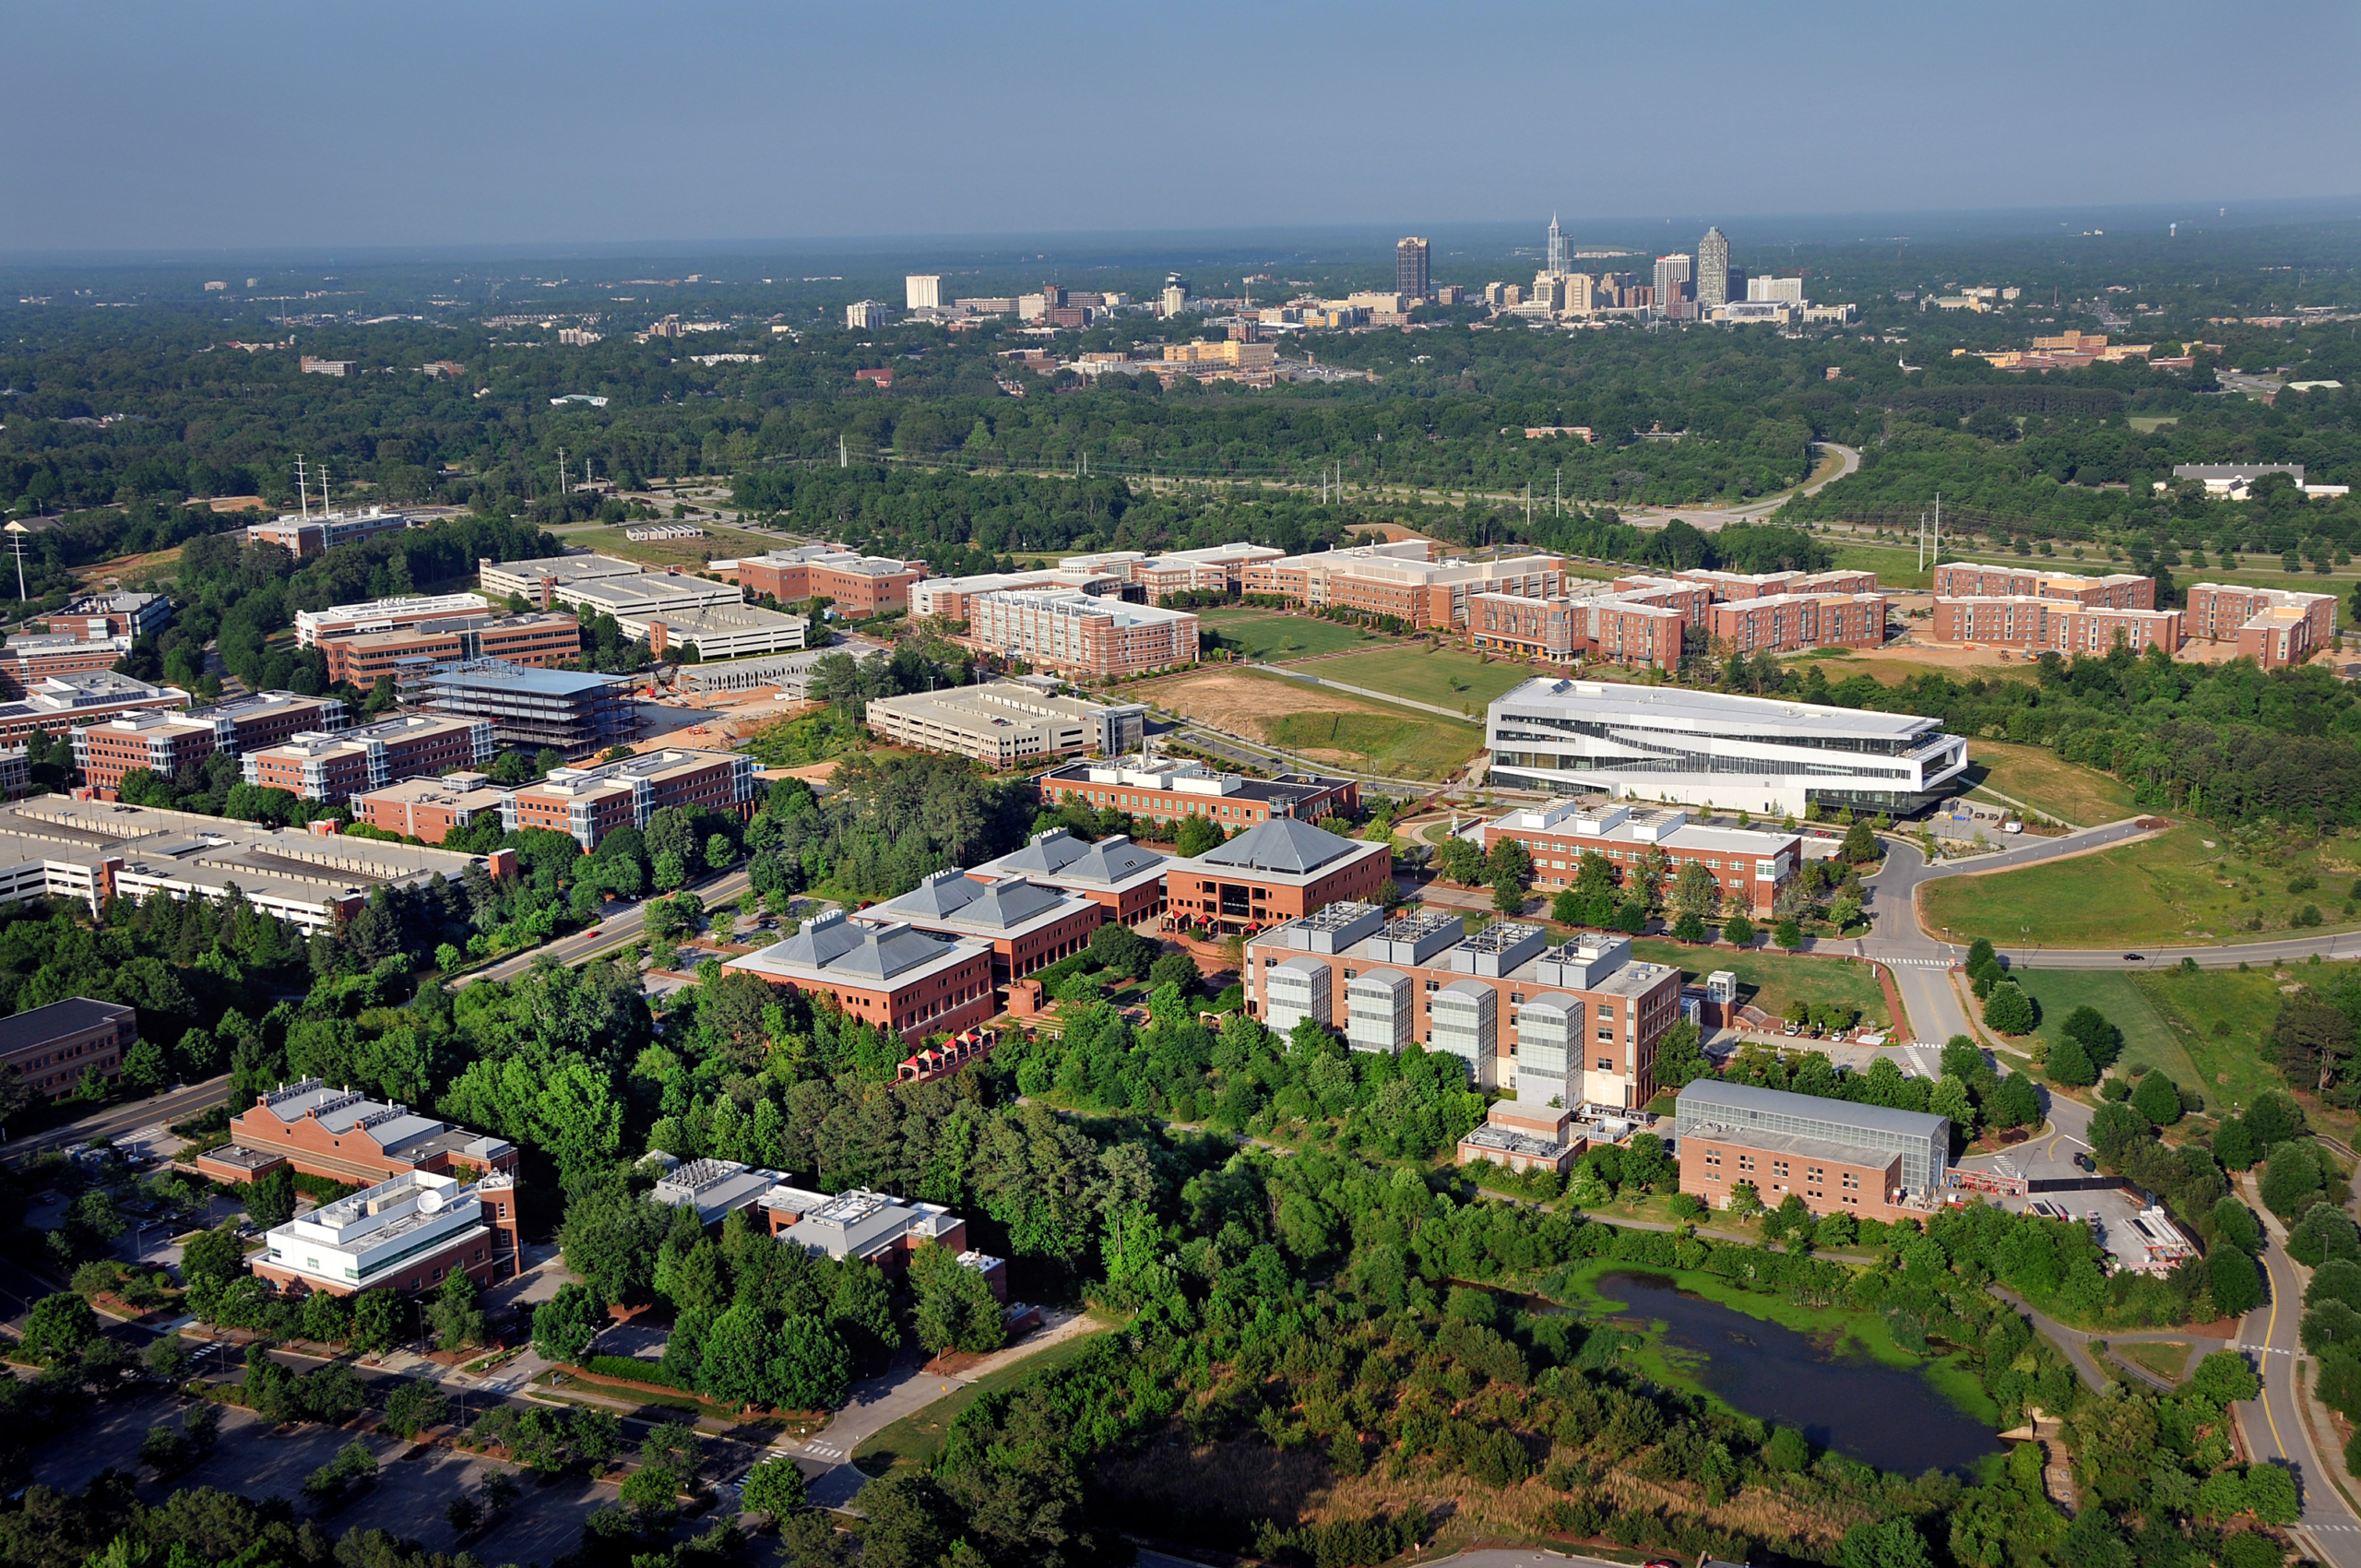 Centennial Campus, looking northeast towards Downtown Raleigh.